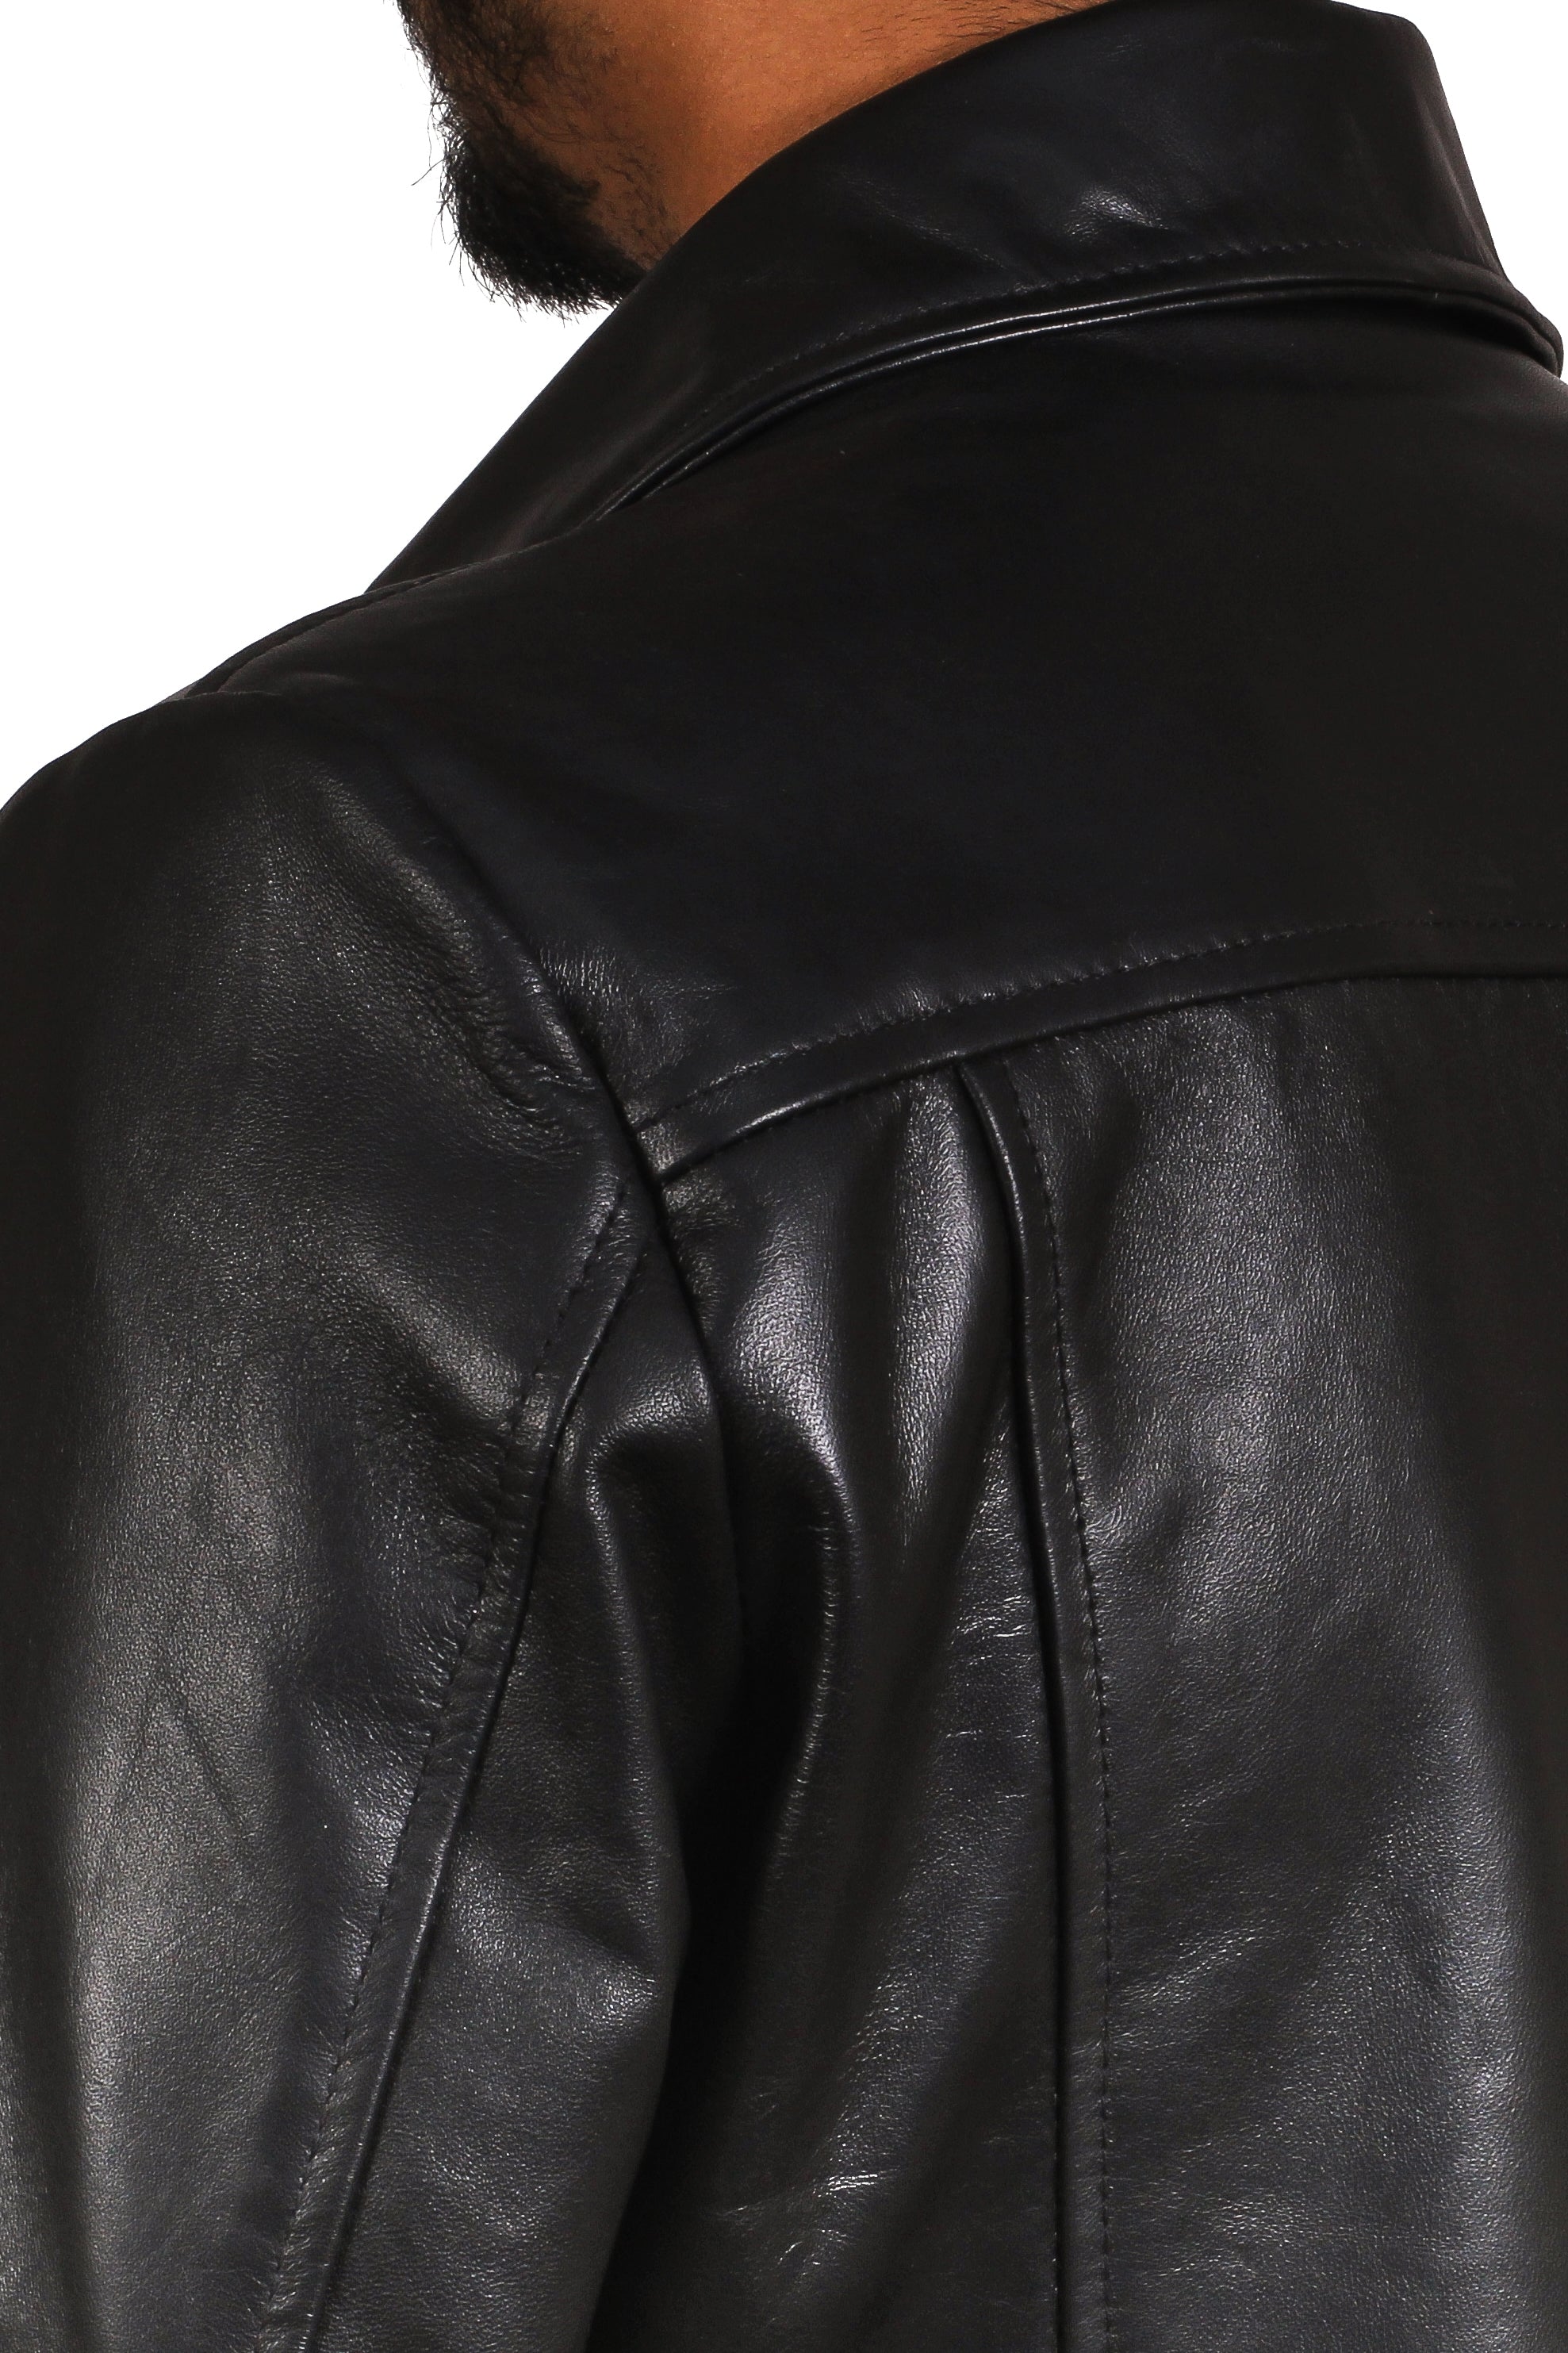 Black Leather Trench Coat Leather Vintage Coat Men